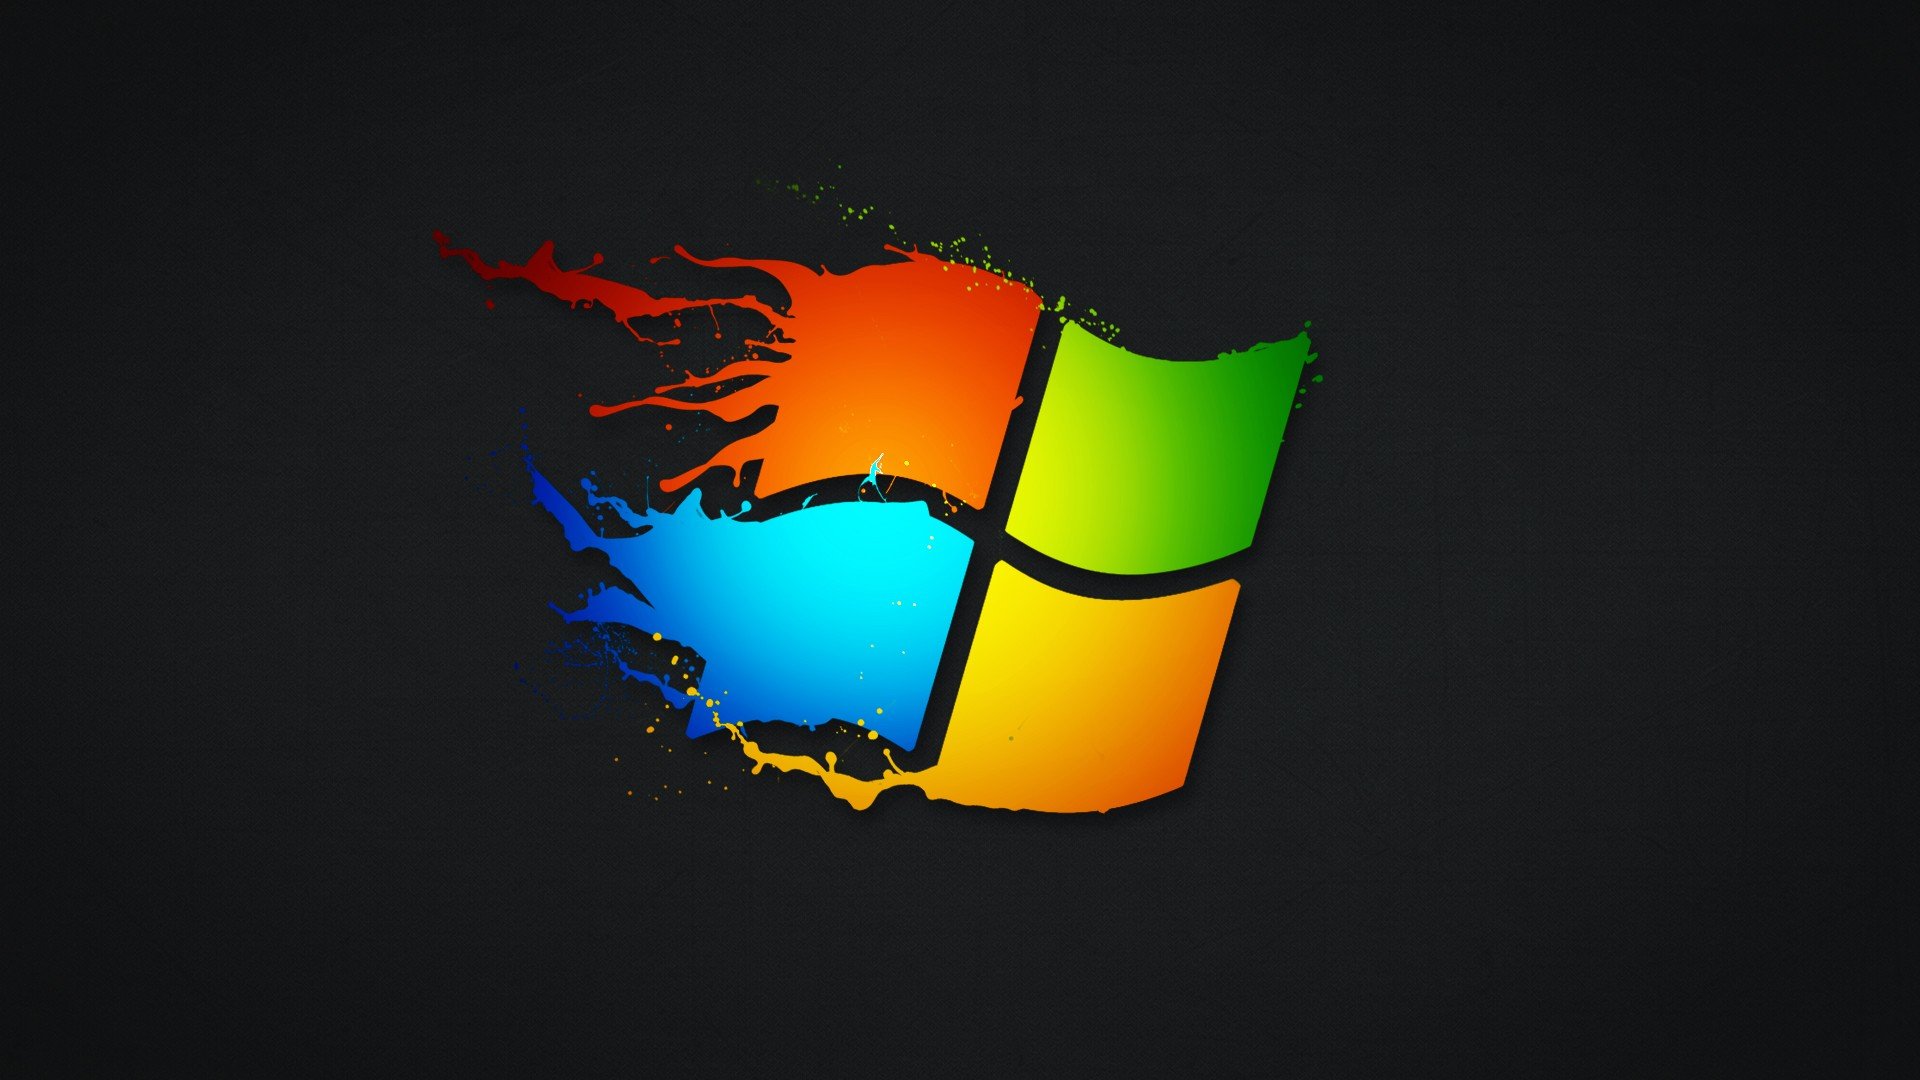 Windows 7, Microsoft Windows, Paint splatter, Simple ...